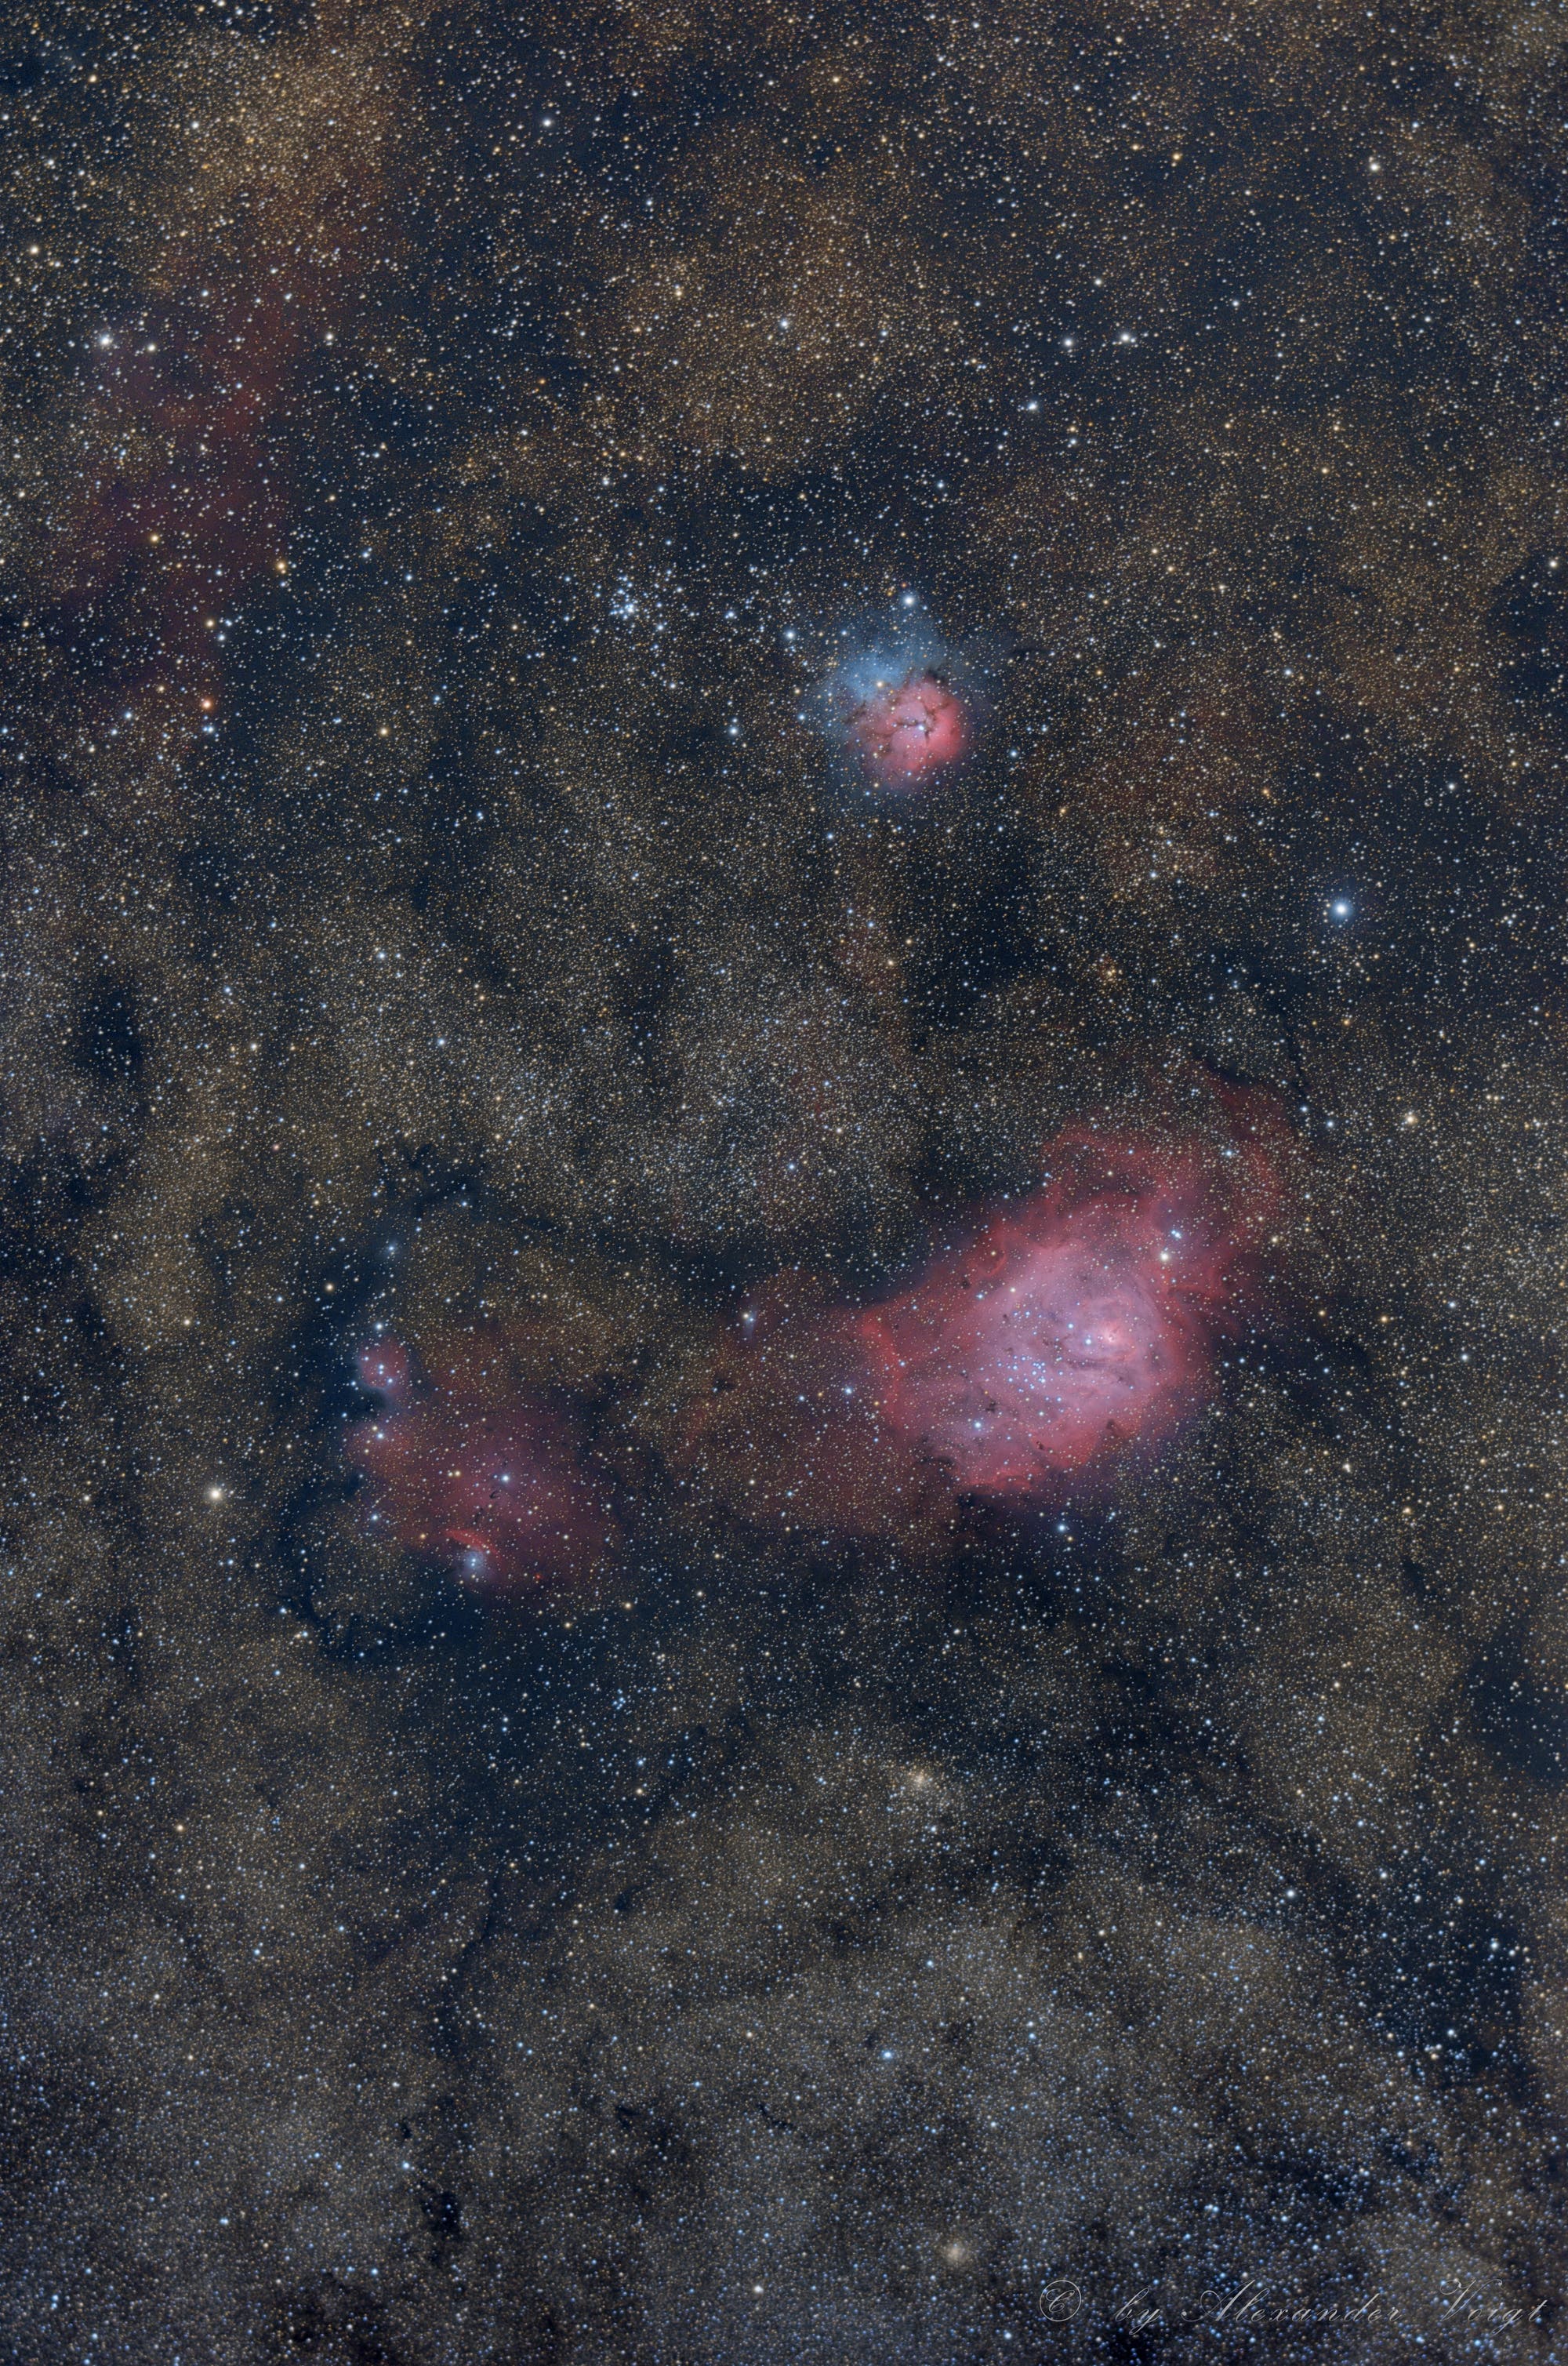 Widefield Lagoon and Trifid Nebula